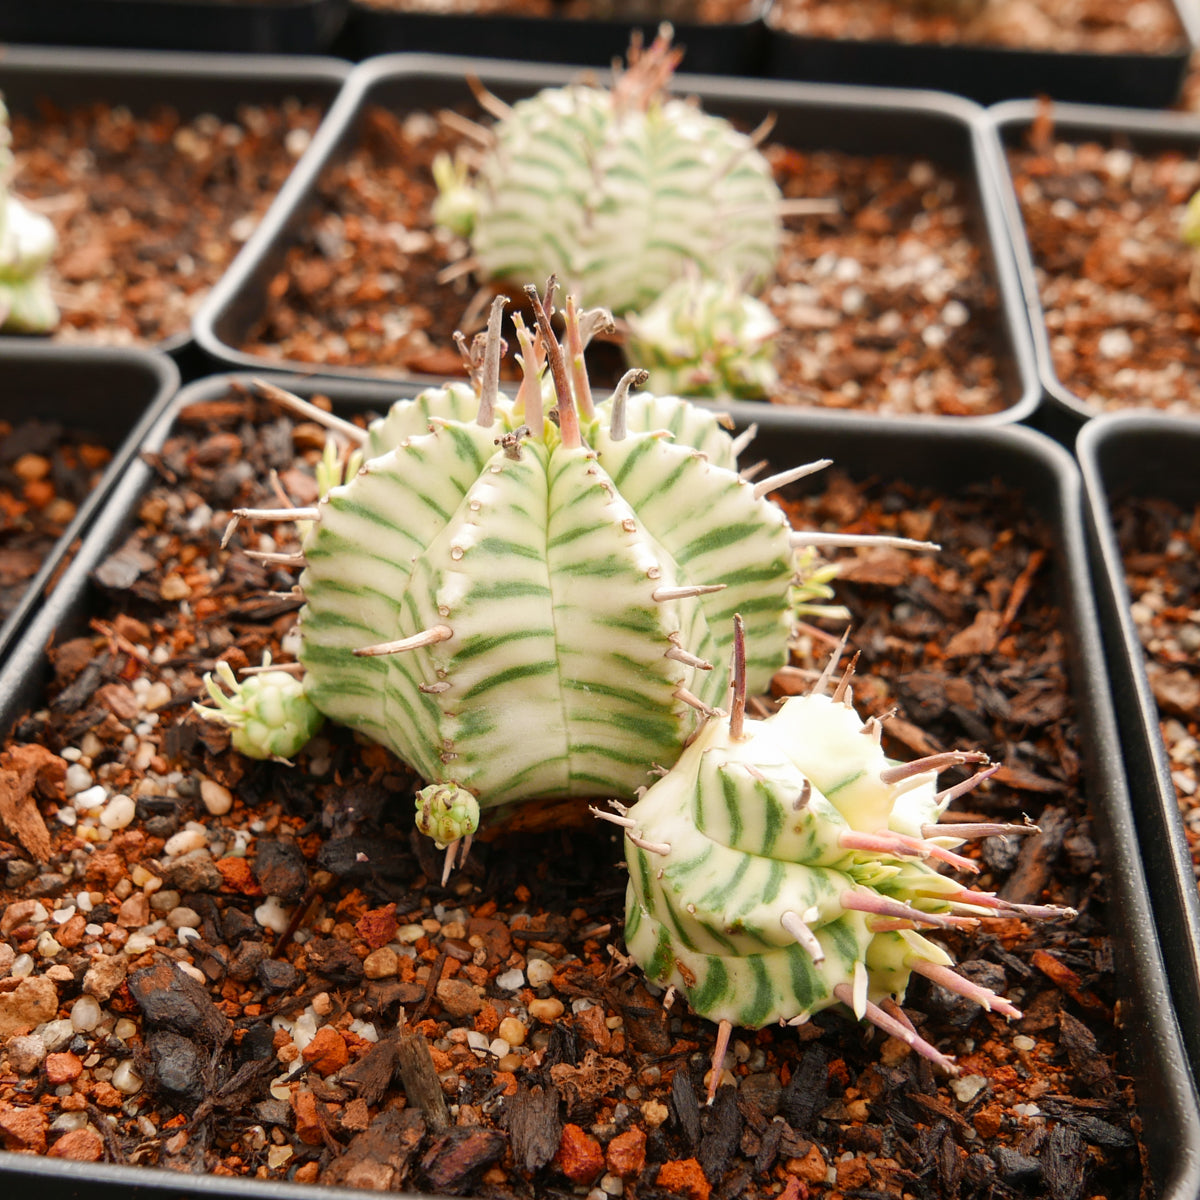 Euphorbia meloformis variegated - Vivid Root